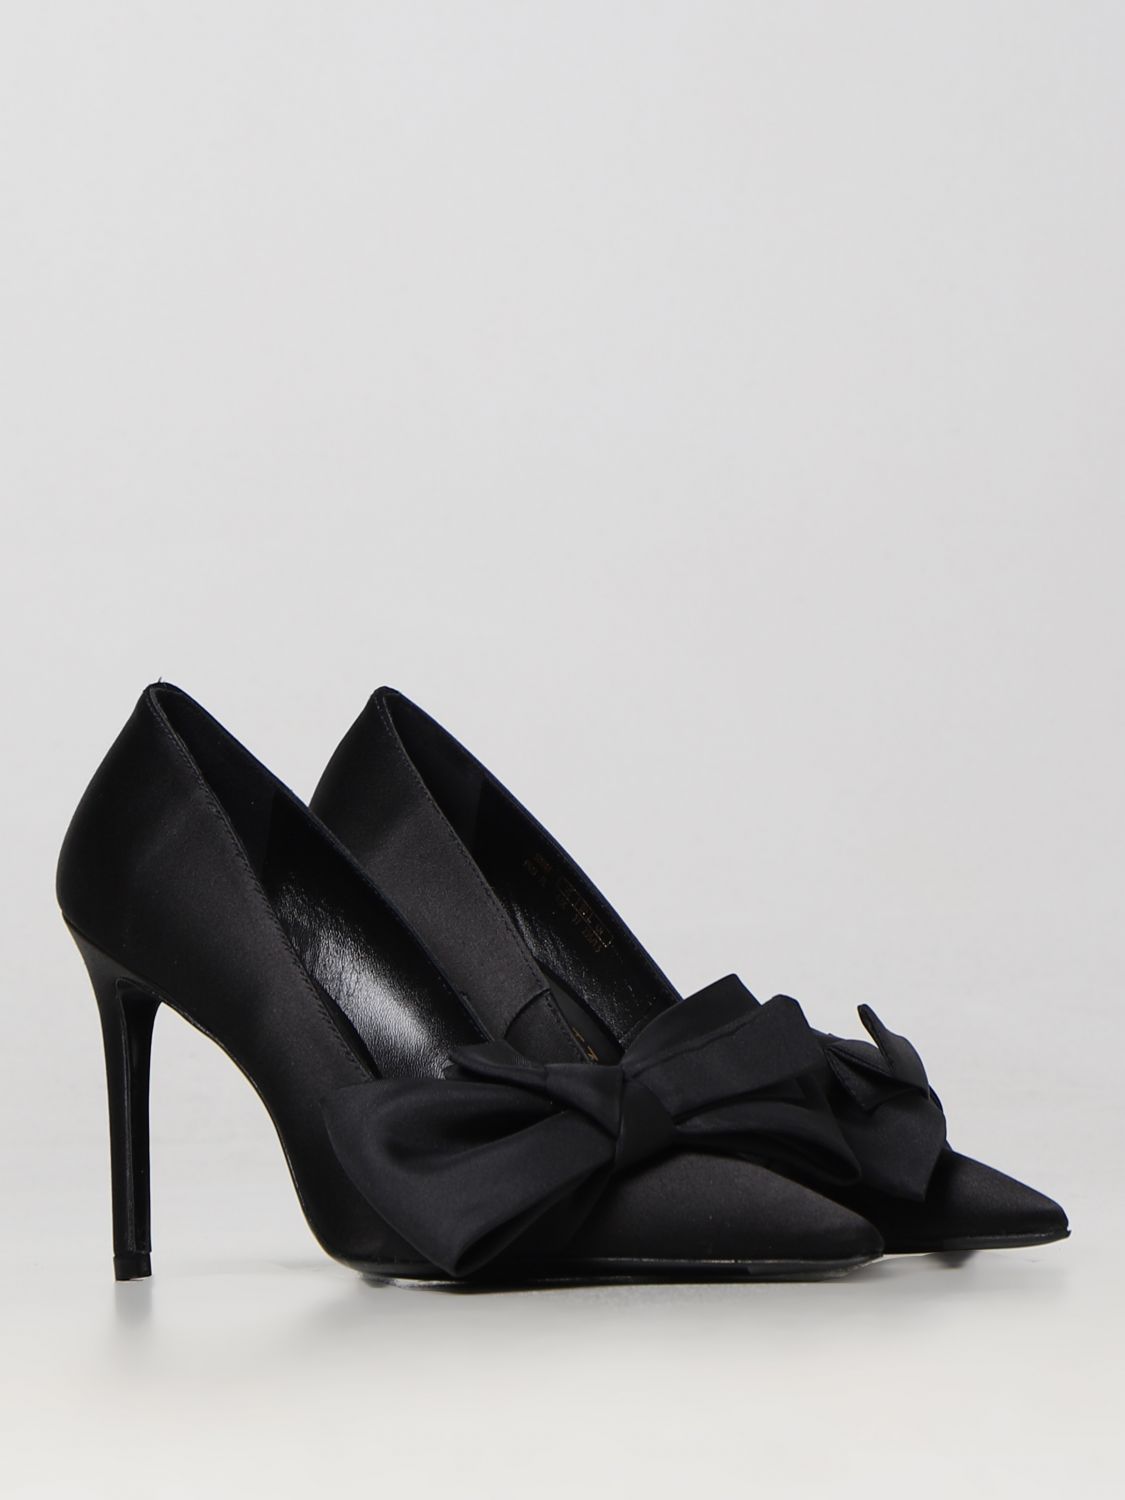 STUART WEITZMAN: Zapatos de salón para mujer, Negro | Zapatos De Stuart Weitzman SD063 en línea GIGLIO.COM